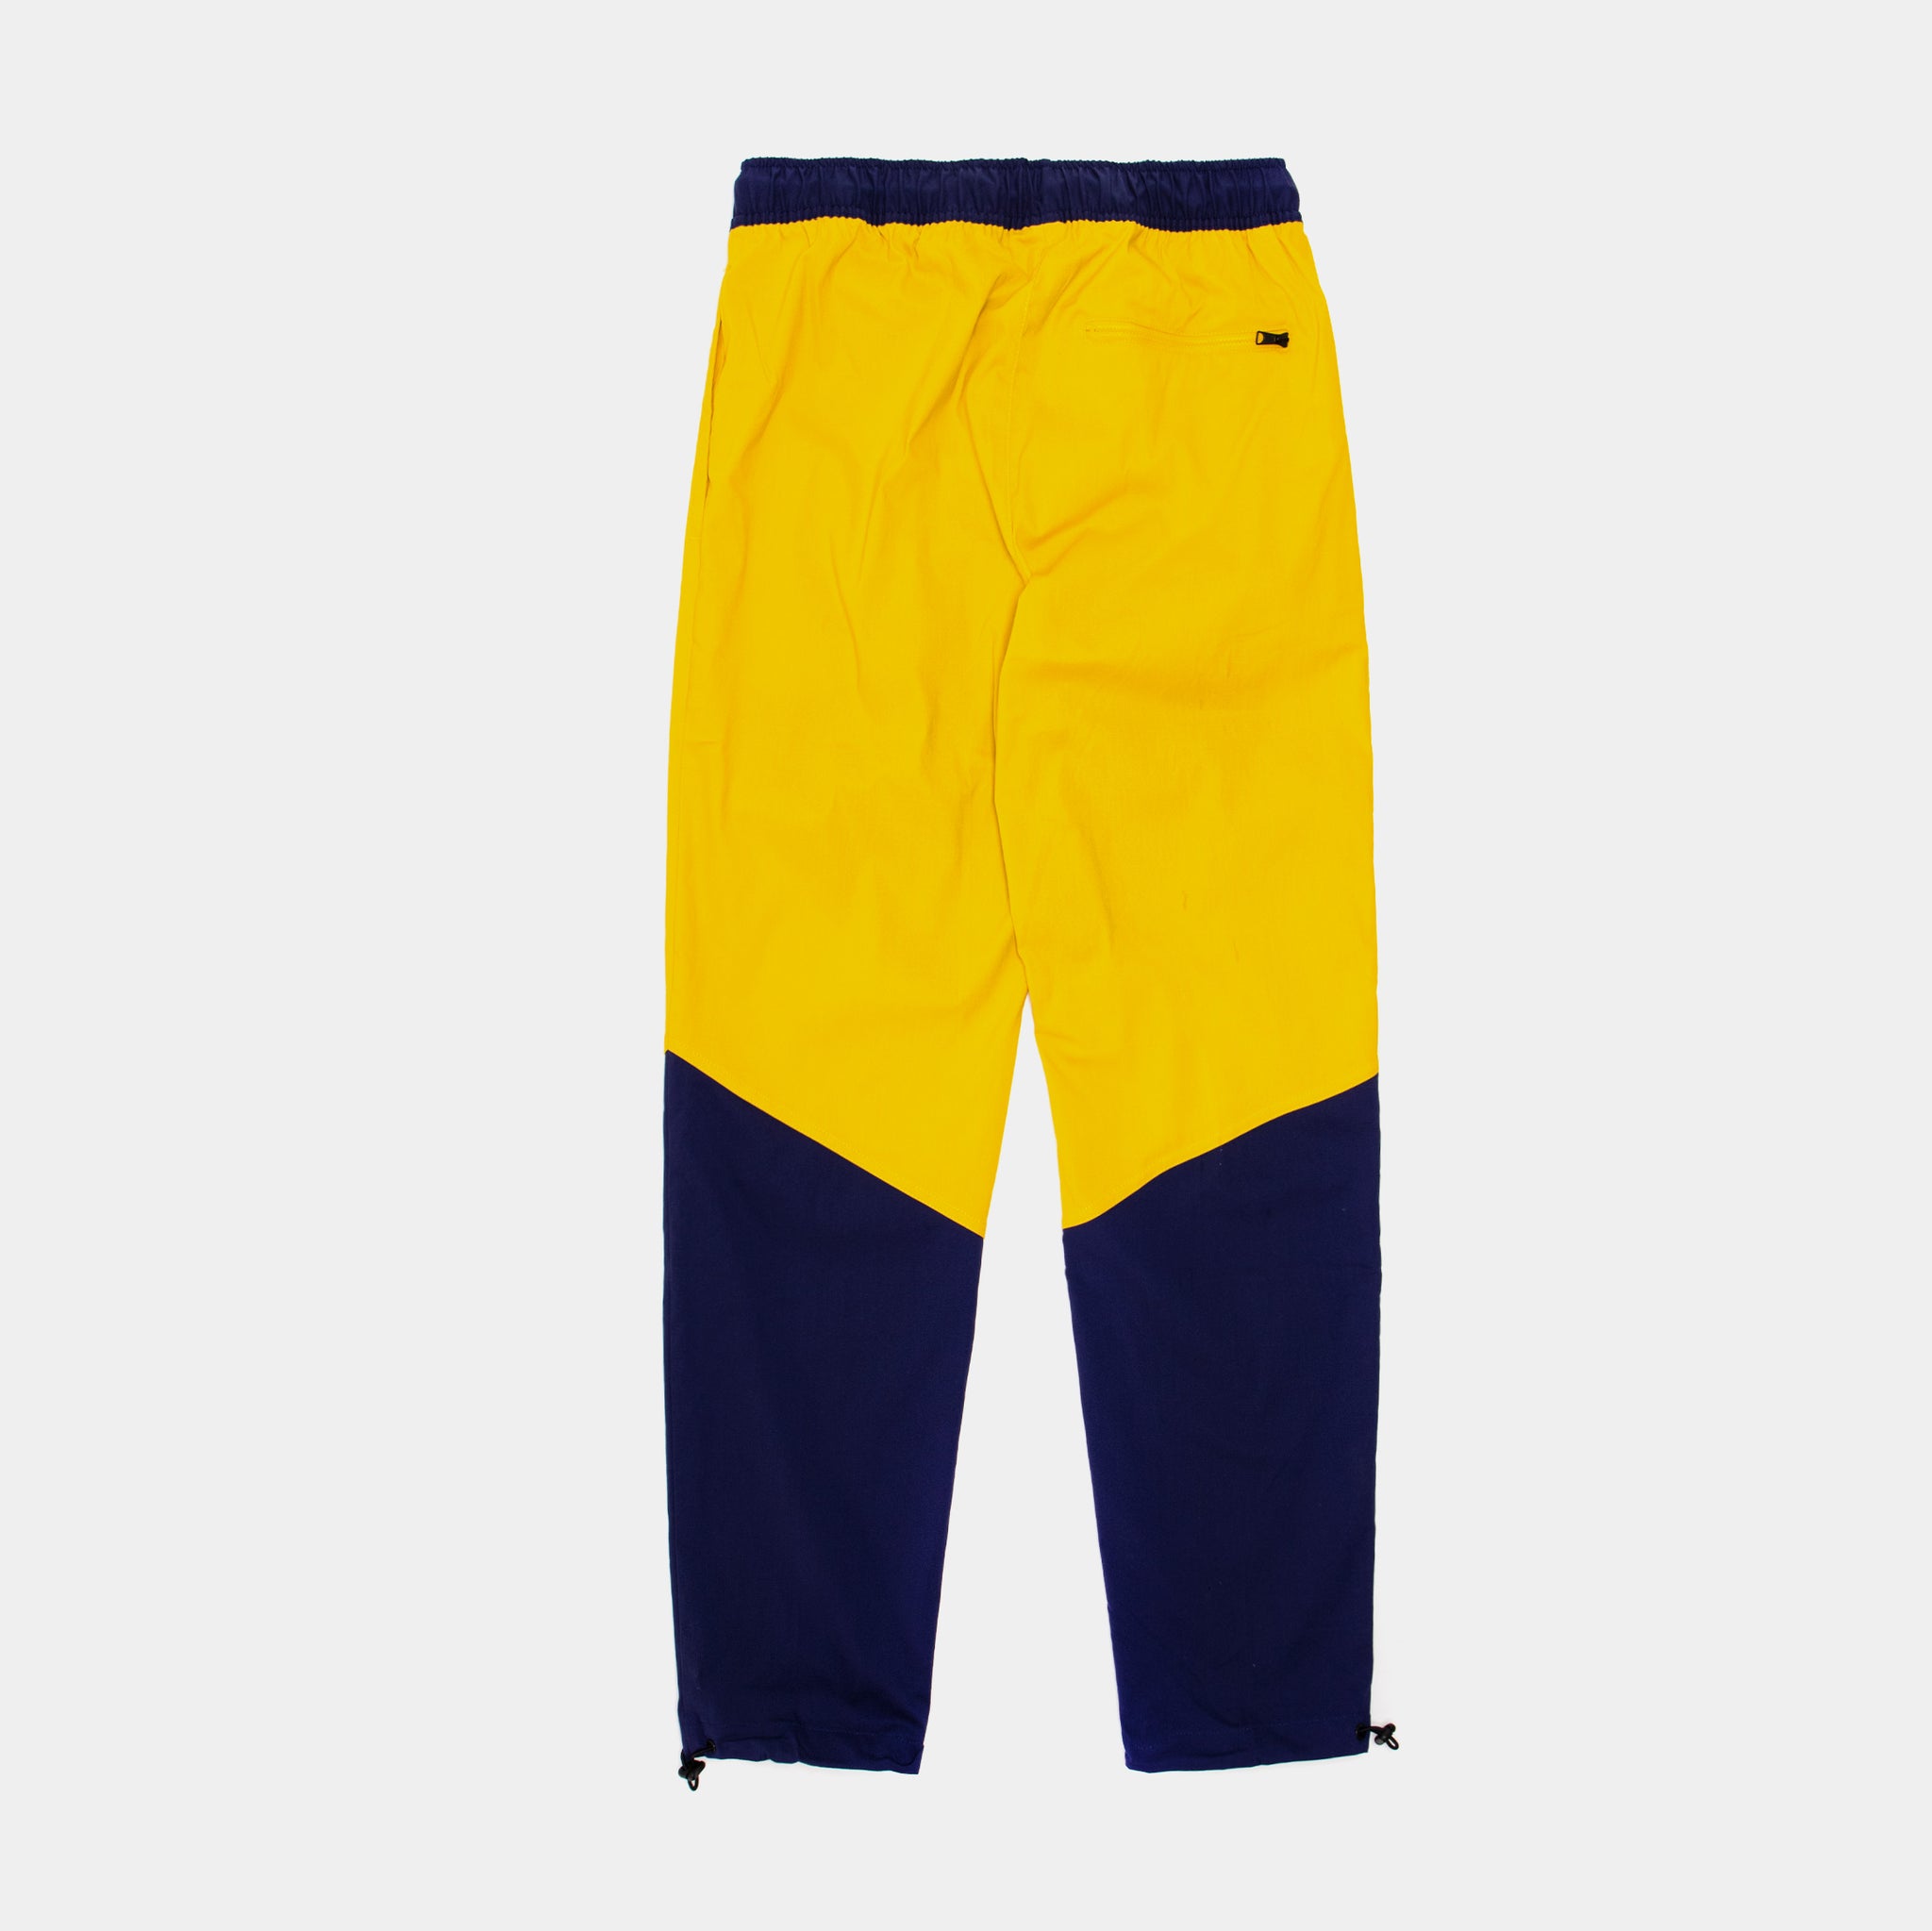 Nike Men's Golden State Warriors Blue Showtime Pants, Large